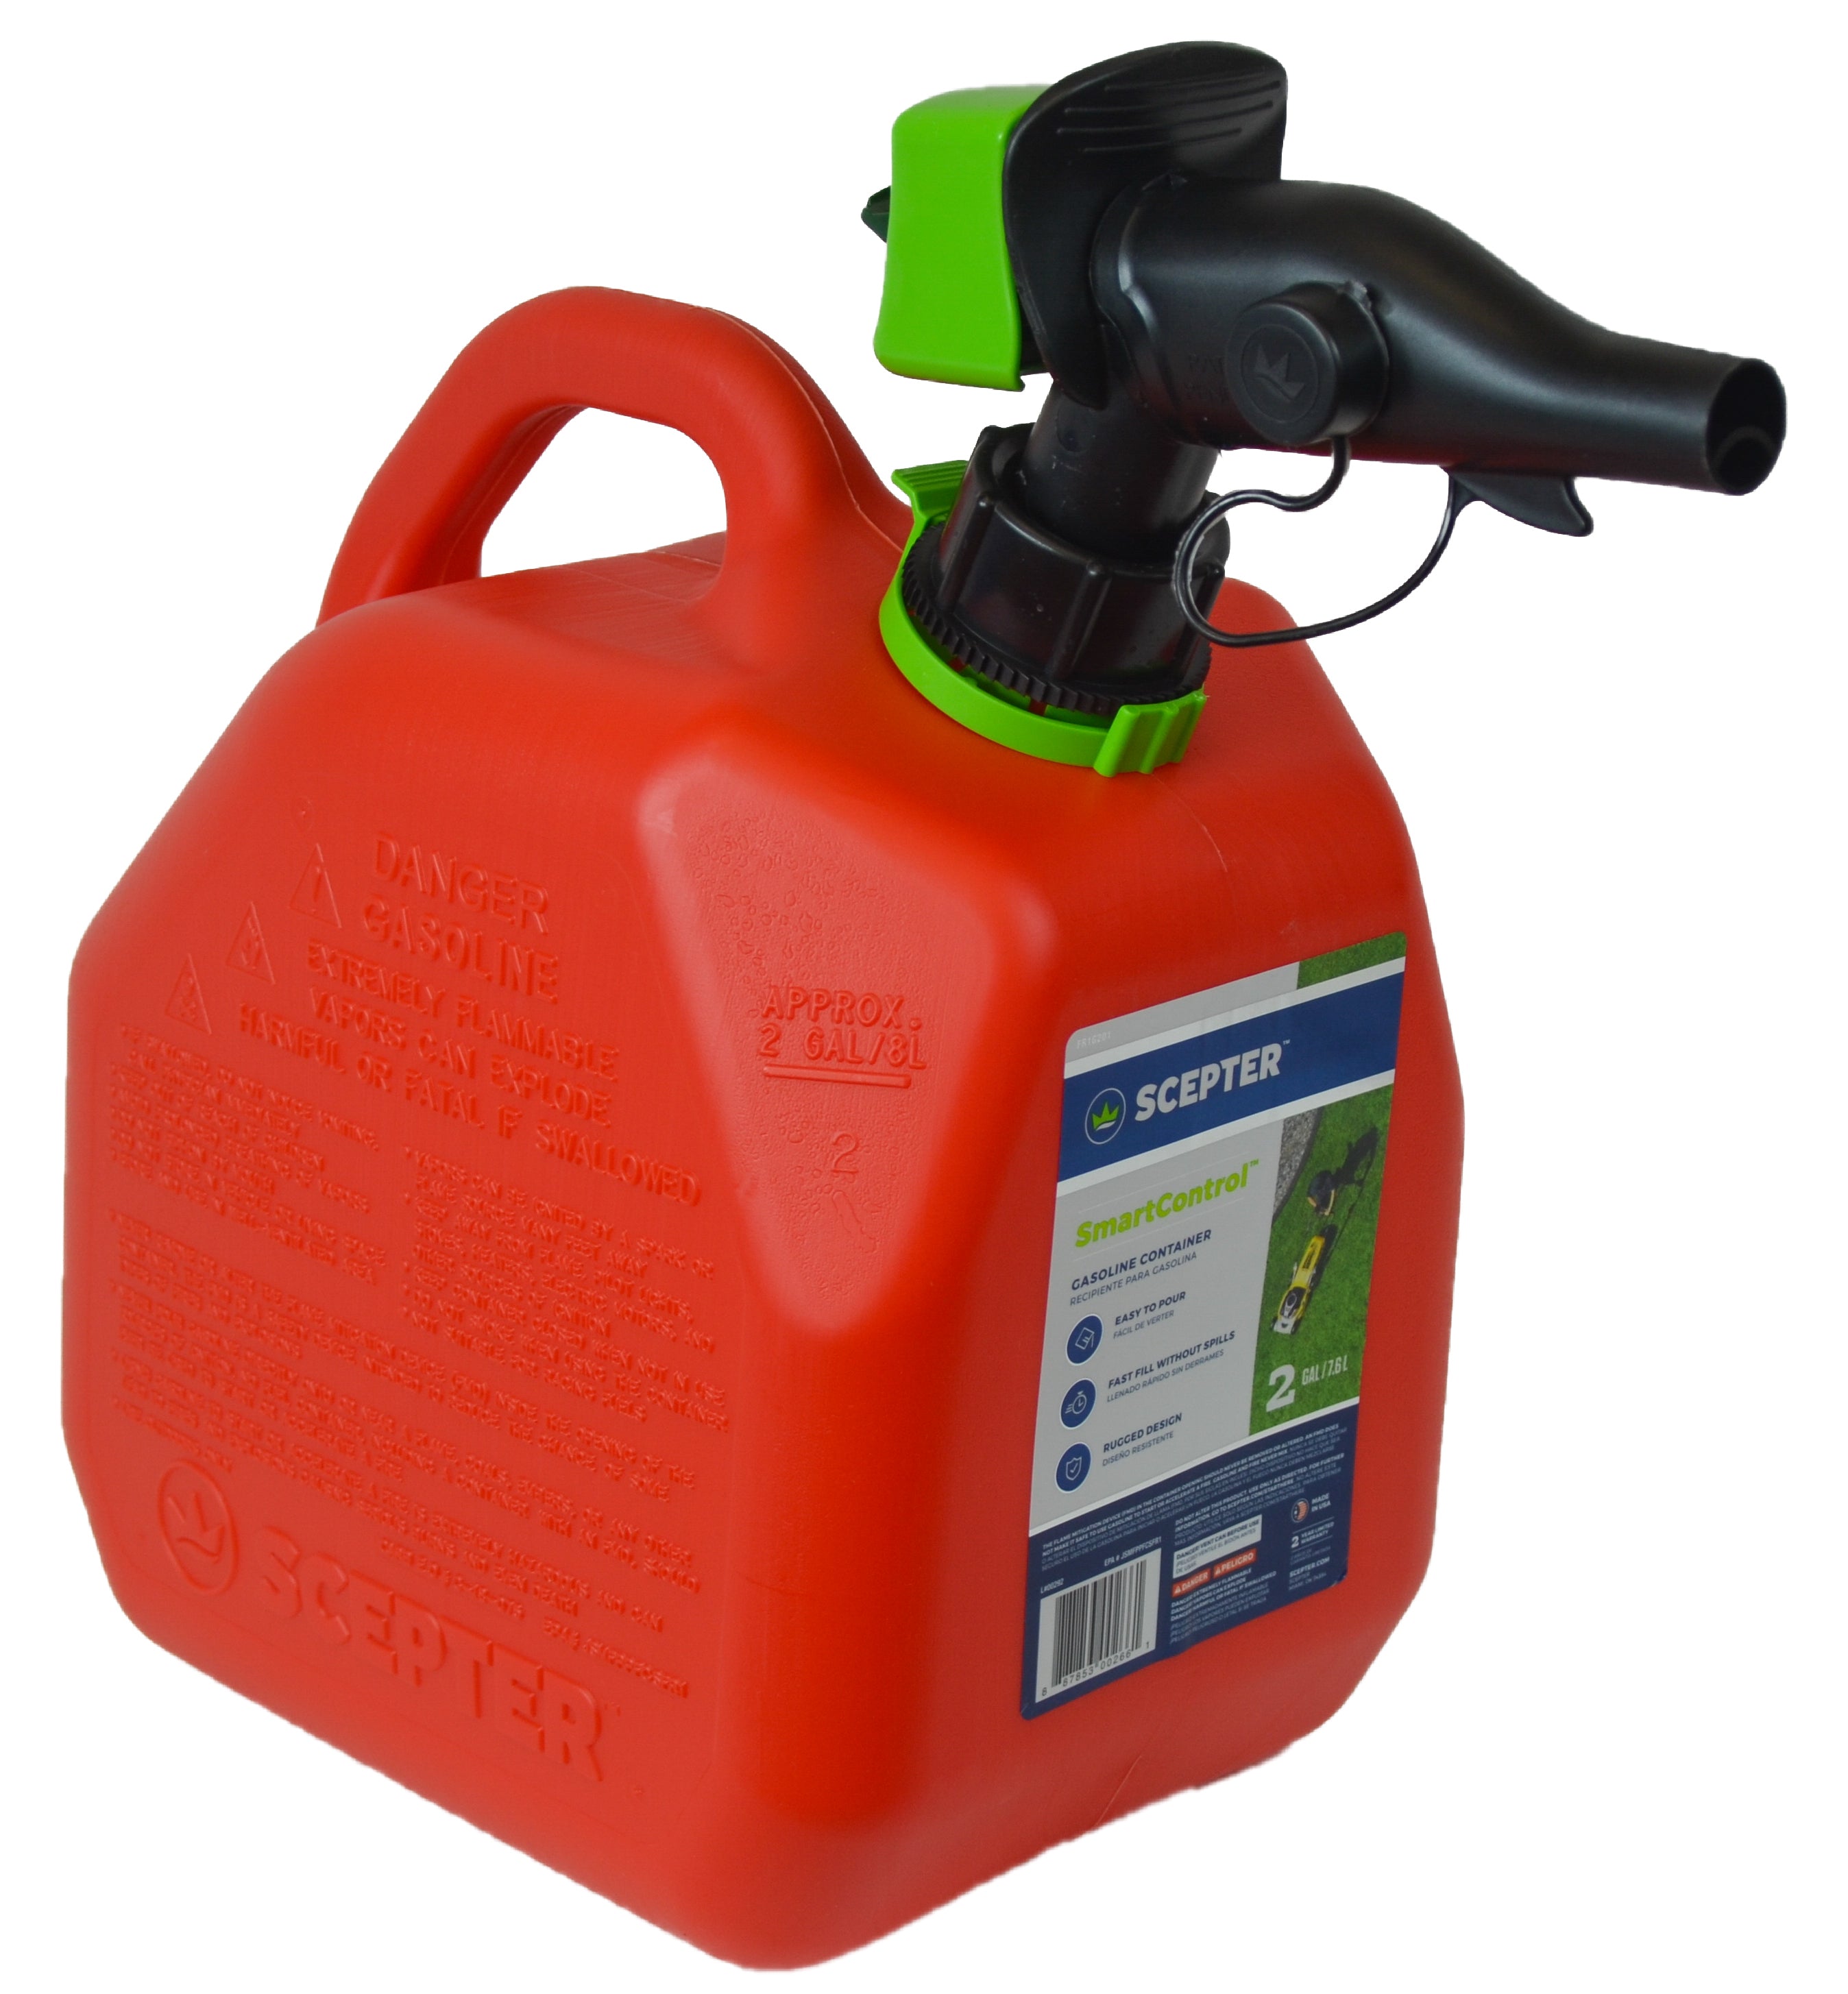 Scepter FR1G201 Scepter SmartControl™ Gas Can, 2 Gallon